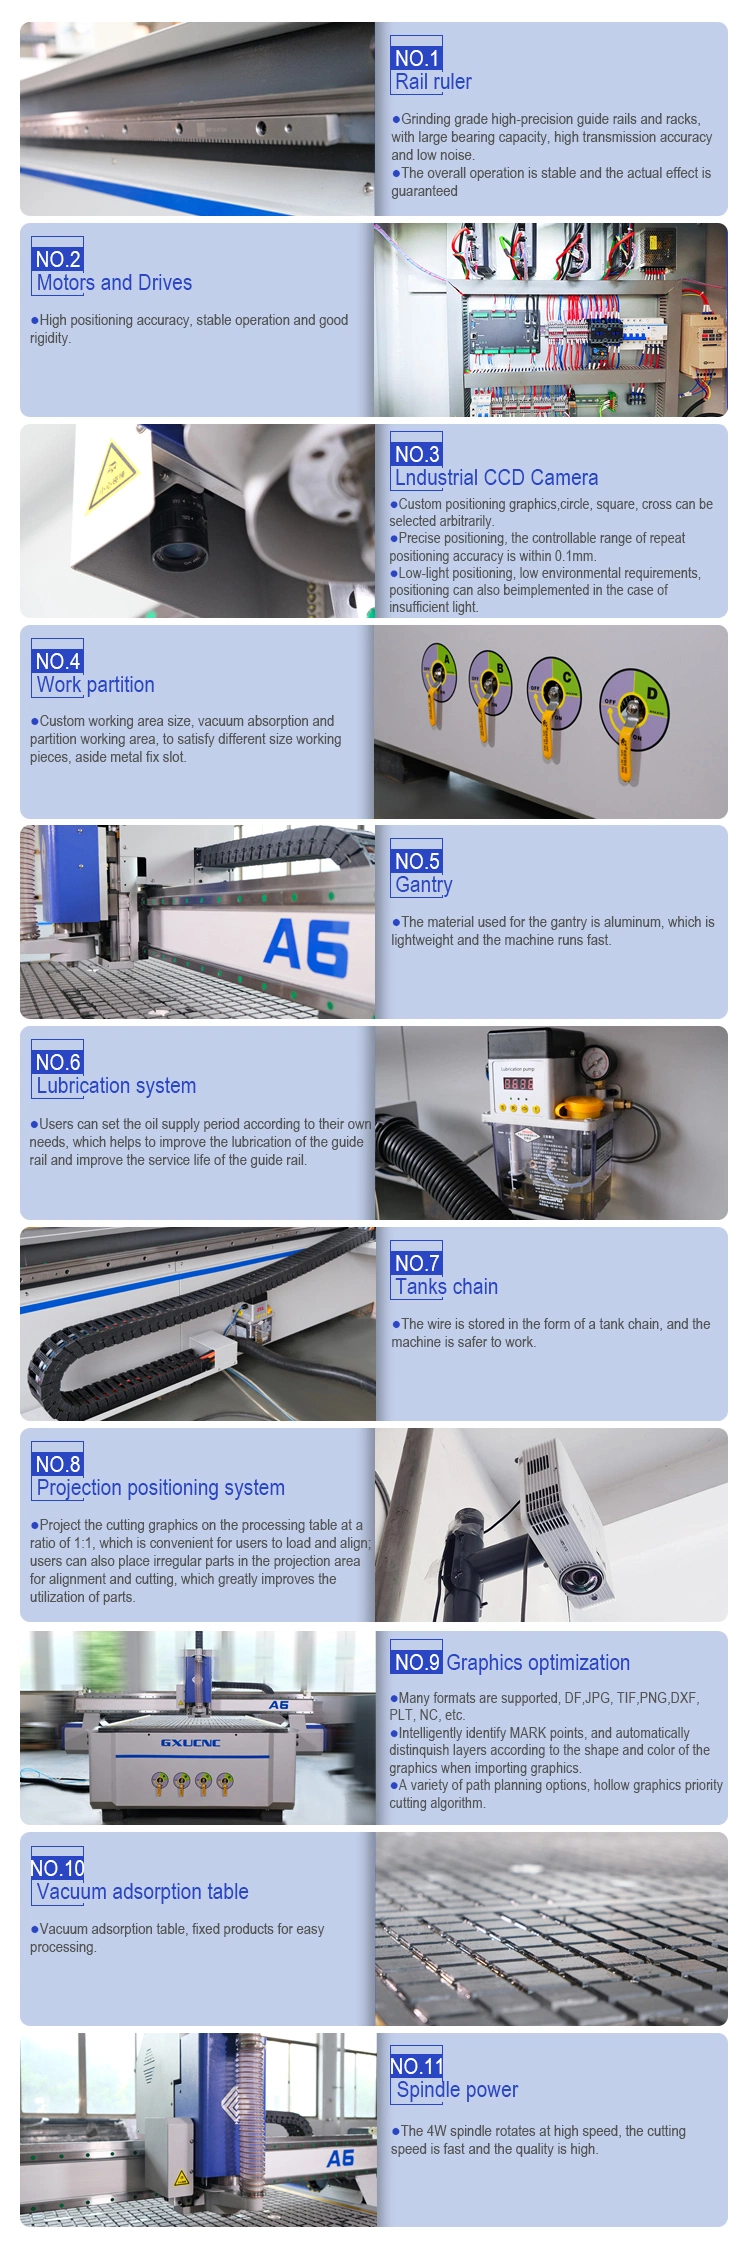 Advertising Logo Cutting 3 Axis PVC Foam Board Cutting CNC Router Machine